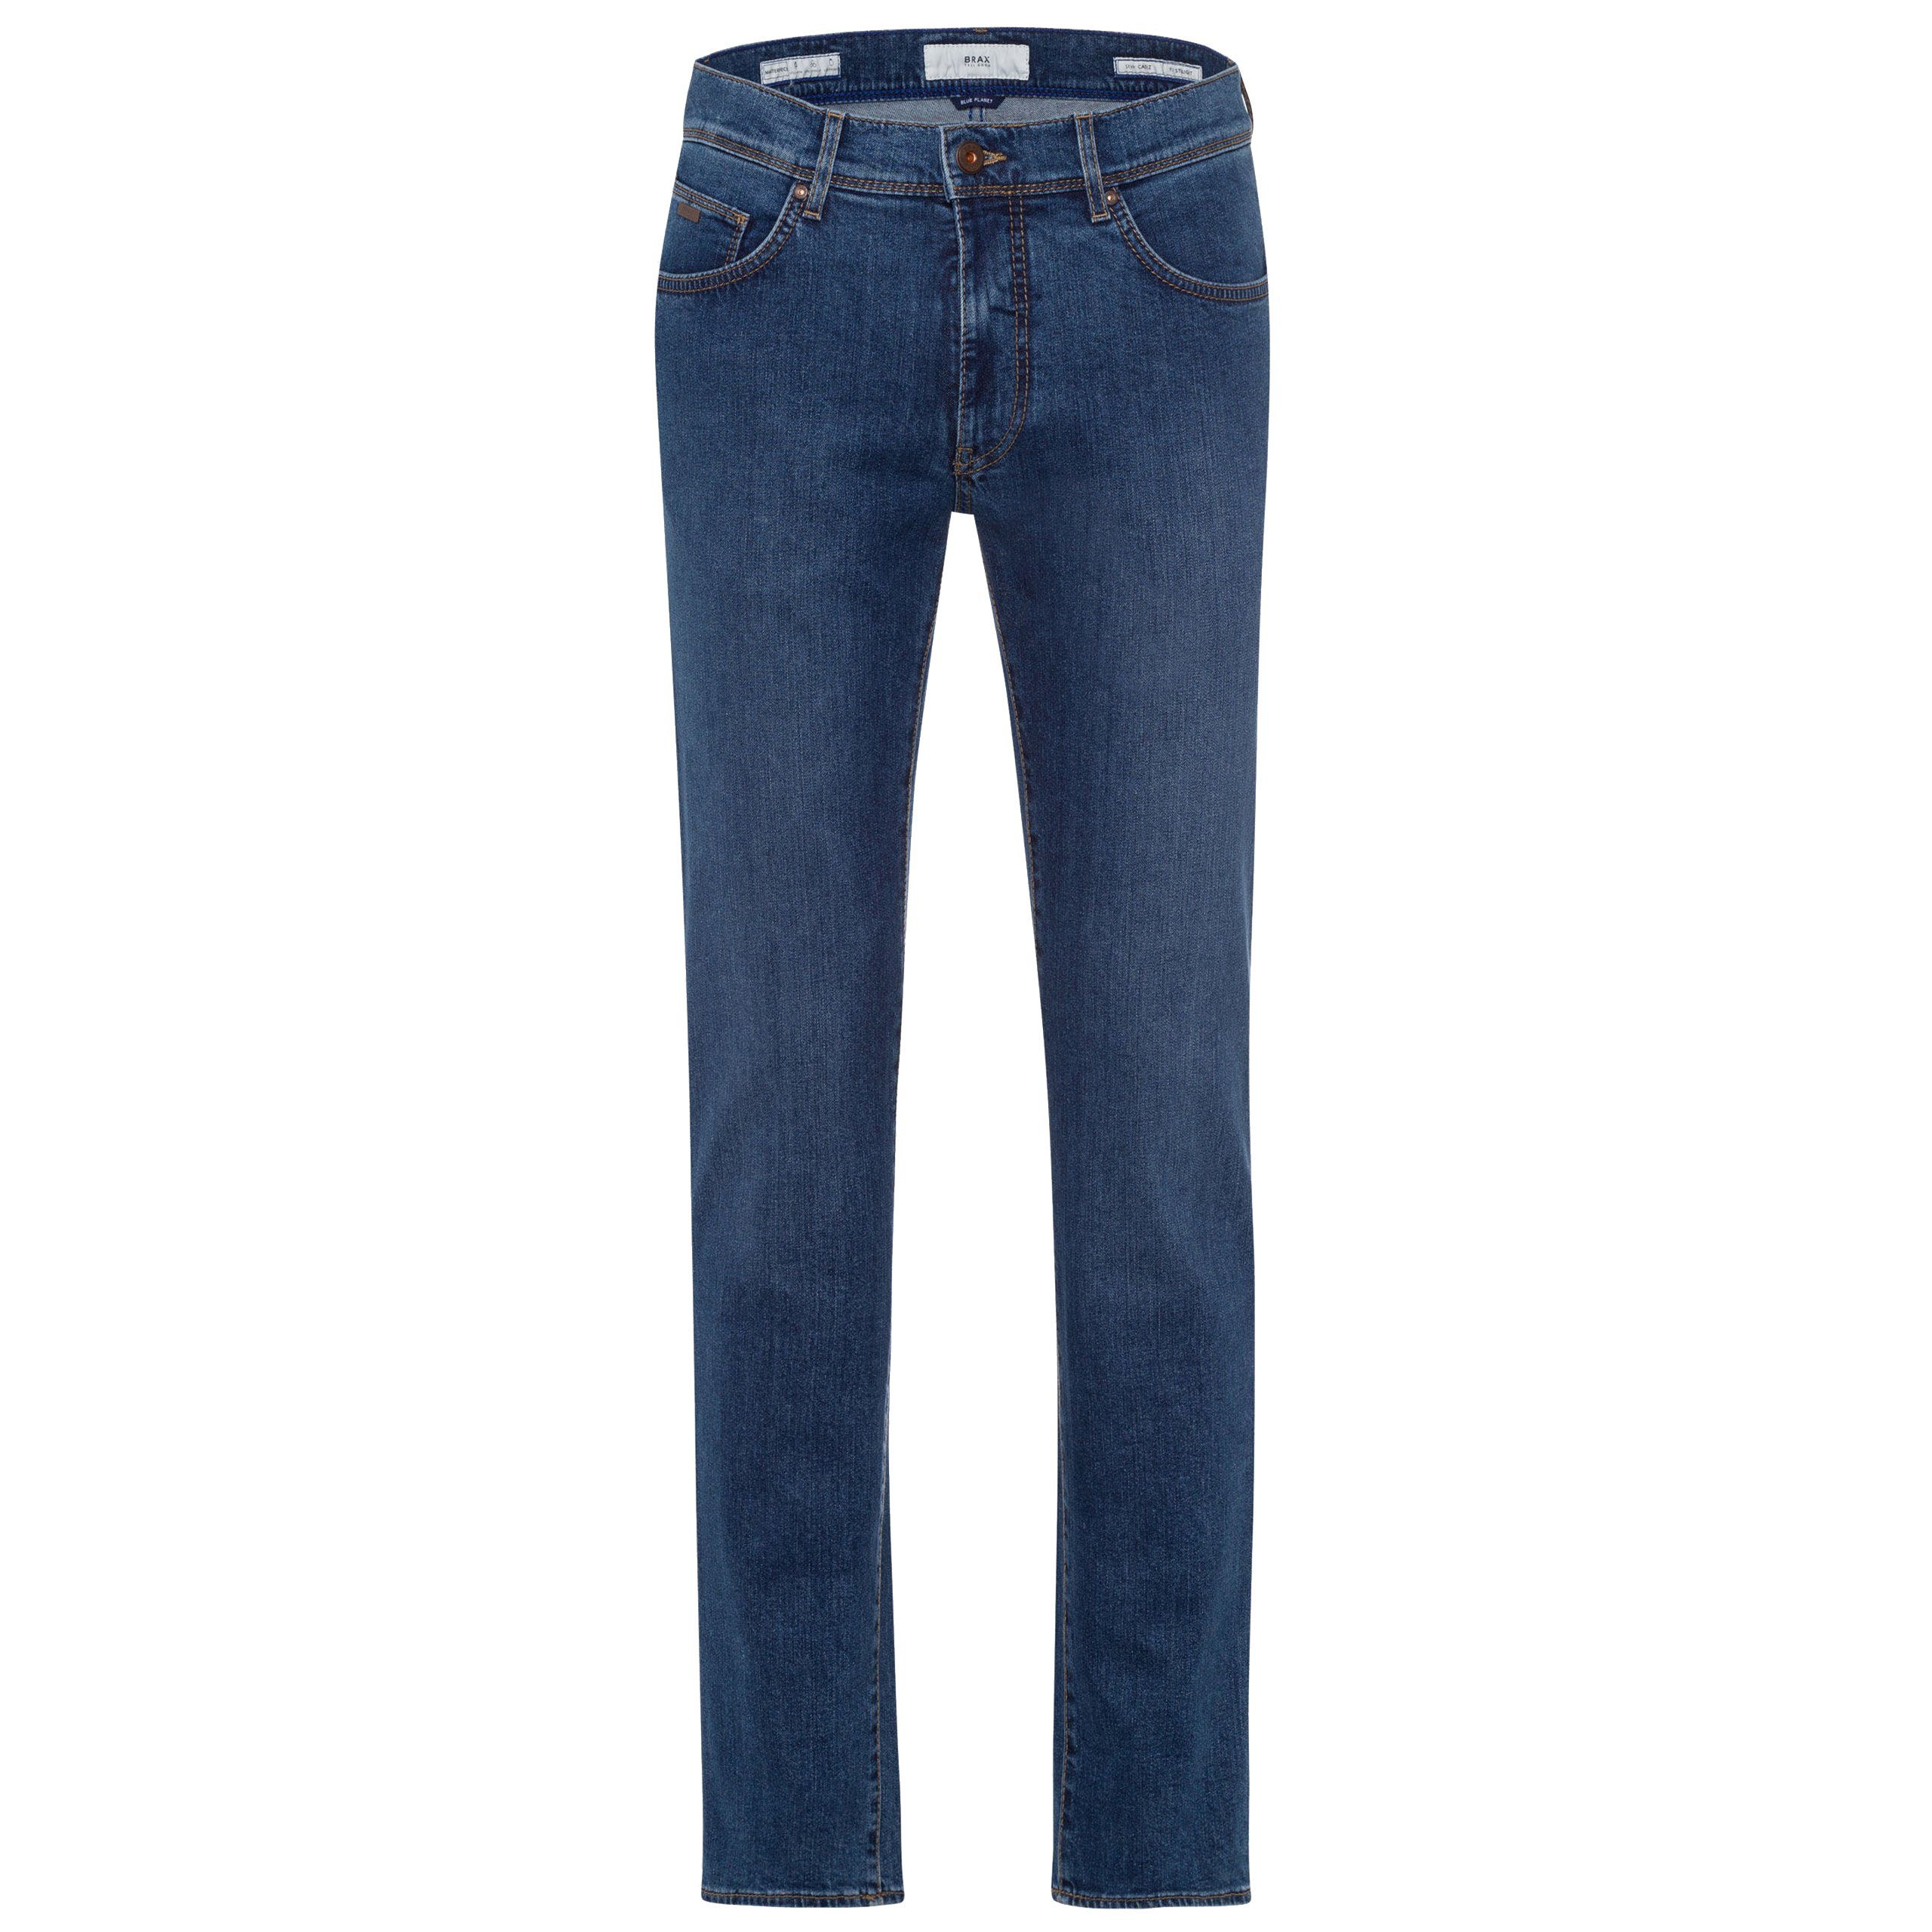 Brax 5-Pocket-Hose Style Cadiz Jeans Herren regular blue used